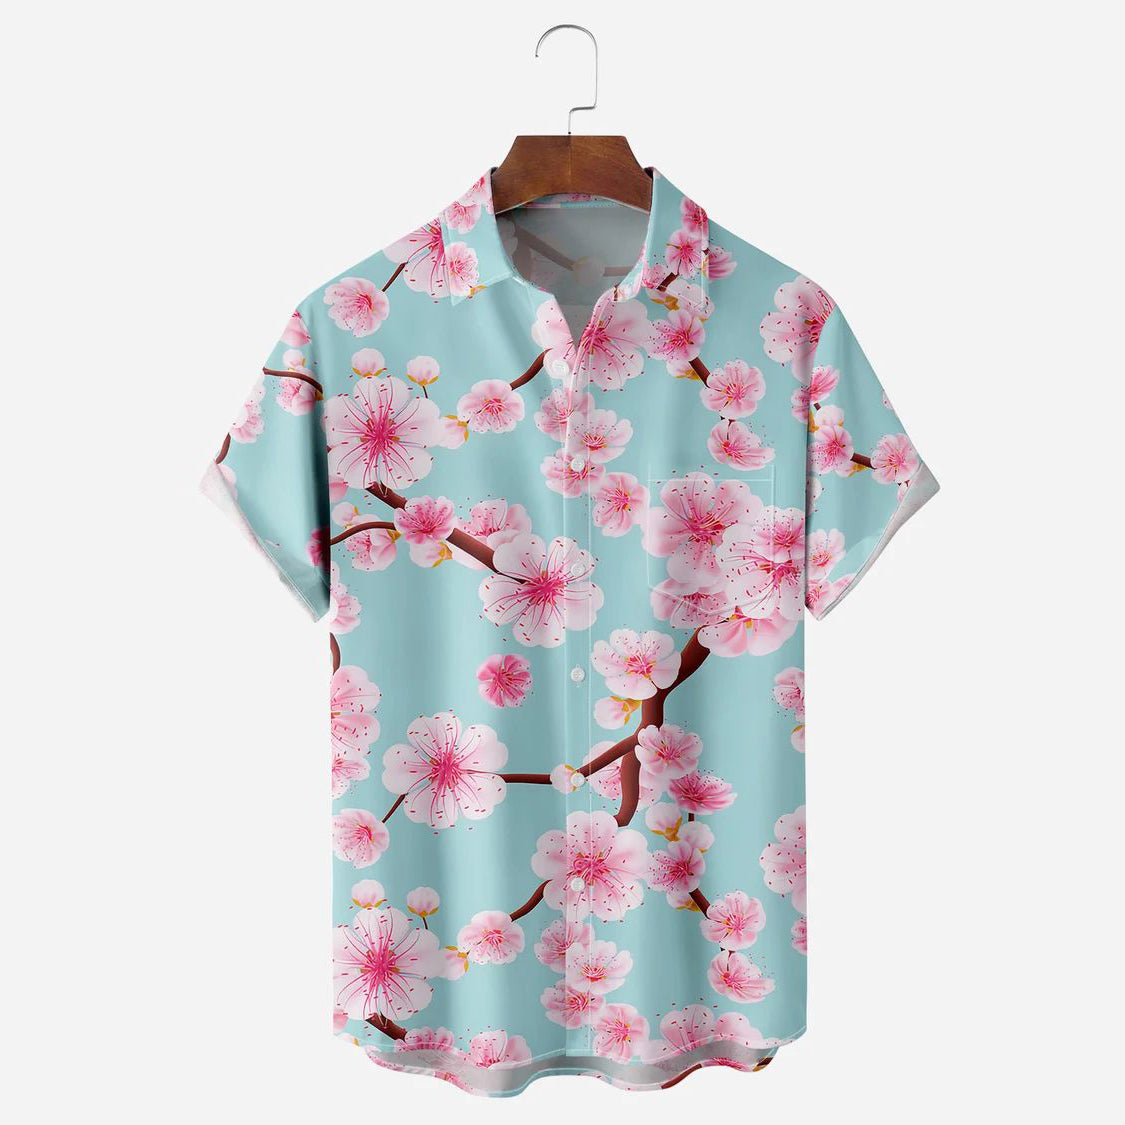 Fashion floral short-sleeved casual shirt